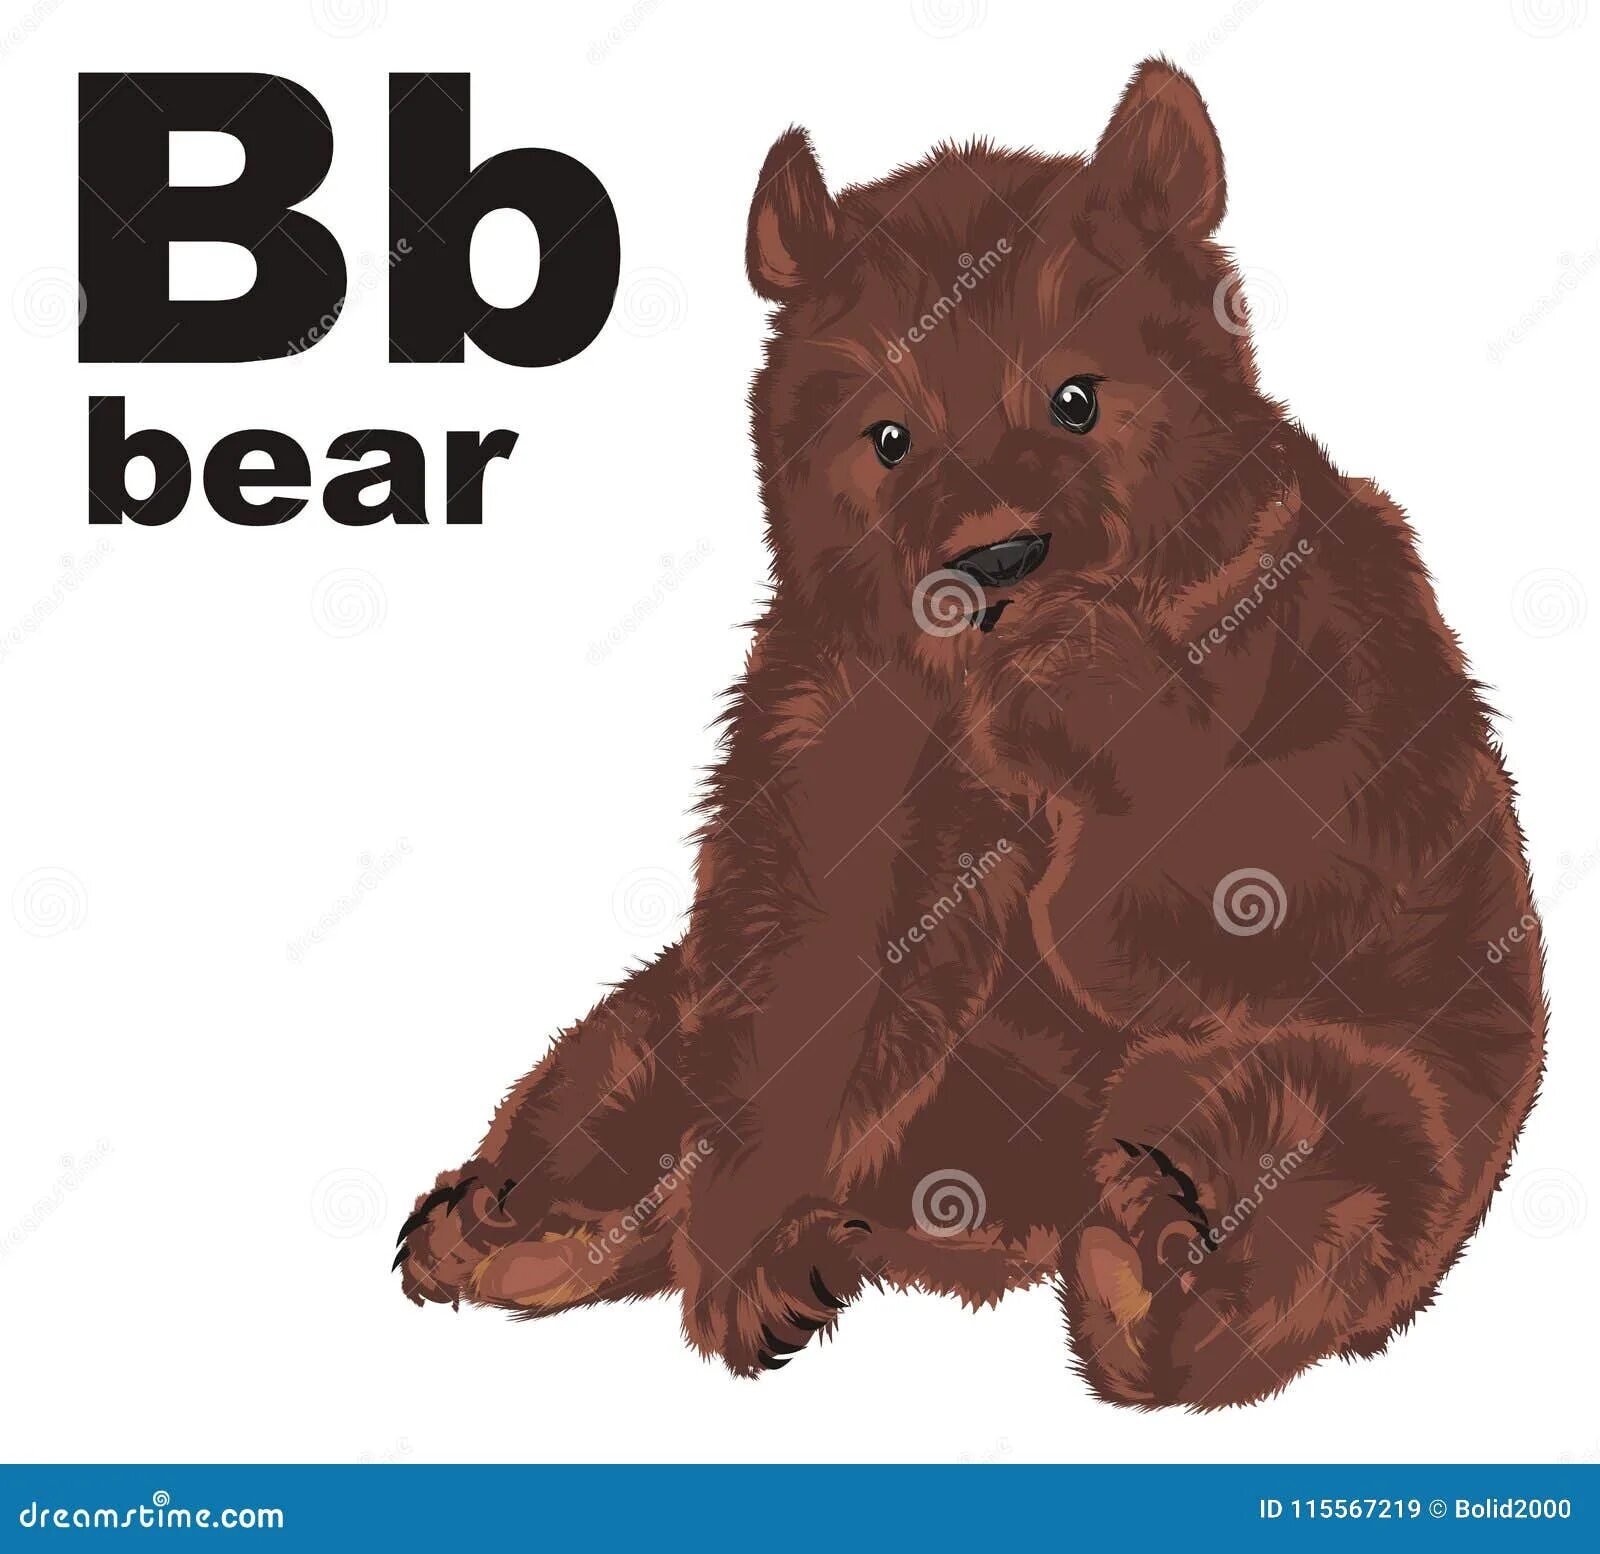 Bear слово. Слово бир в виде медведя. Слово медведь с обводкой. Медведь с буквой z картинка.